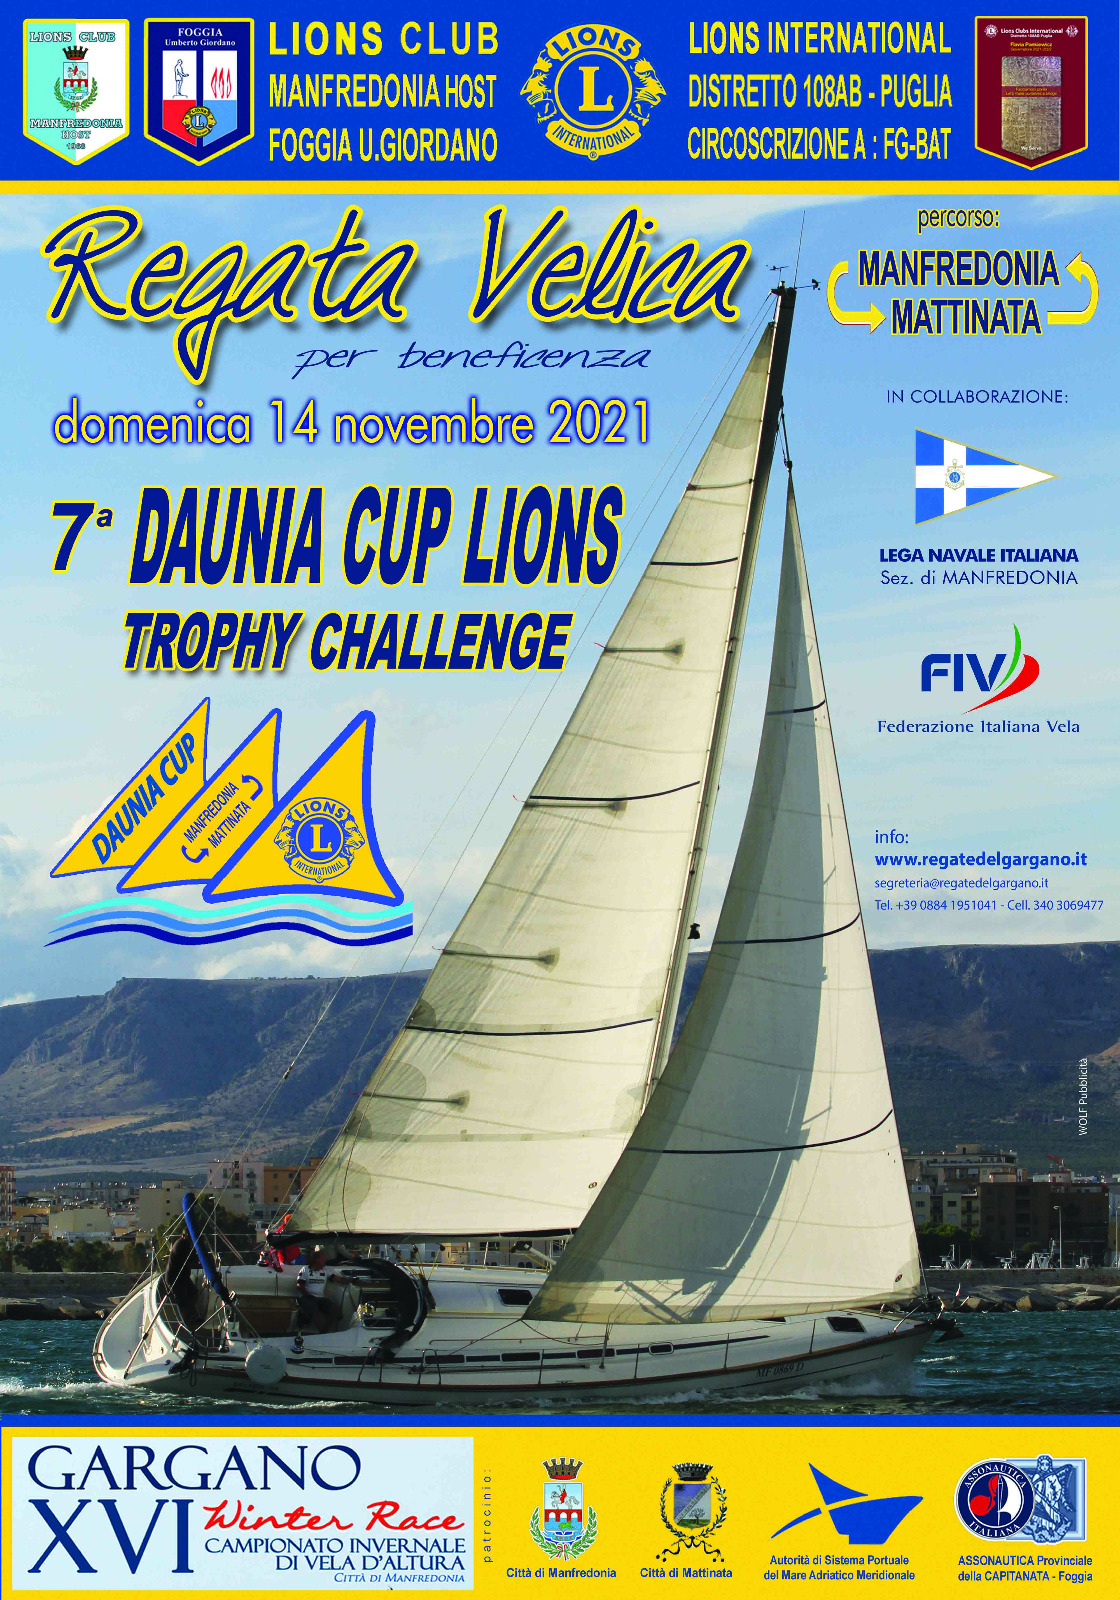 7° DAUNIA CUP LIONS - TROPHY CHALLENGE